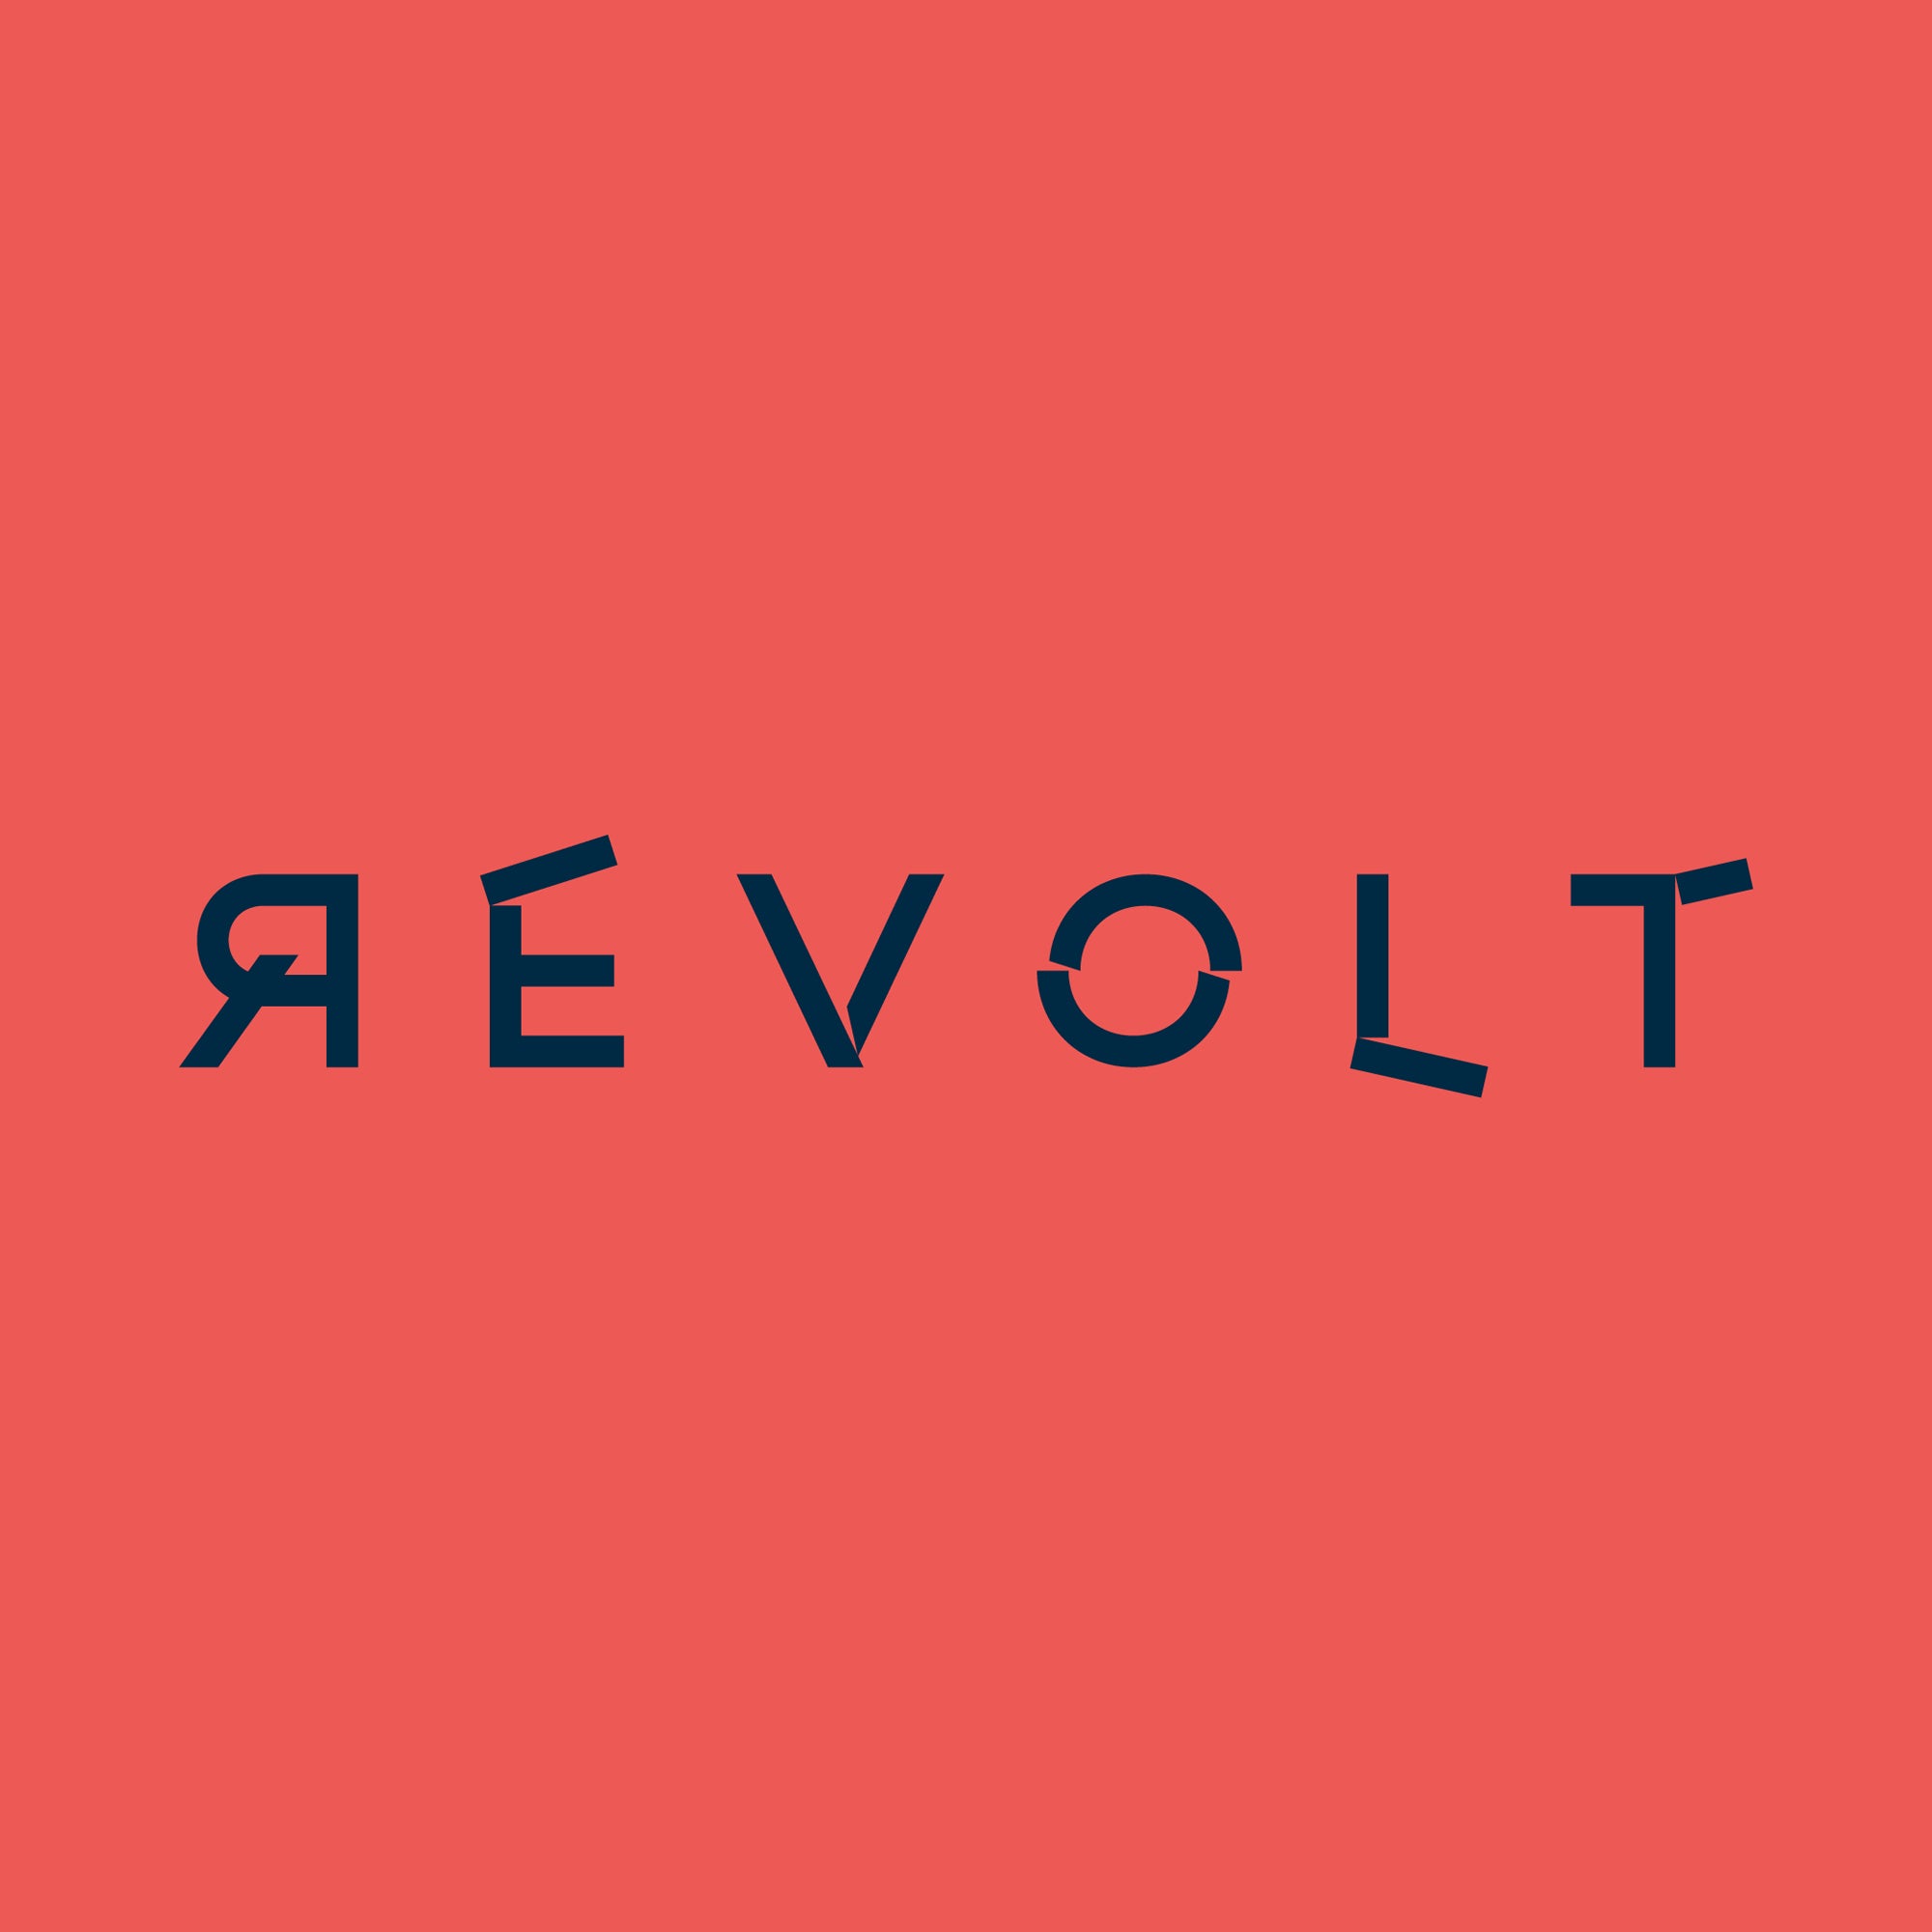 Revolt - Package 02